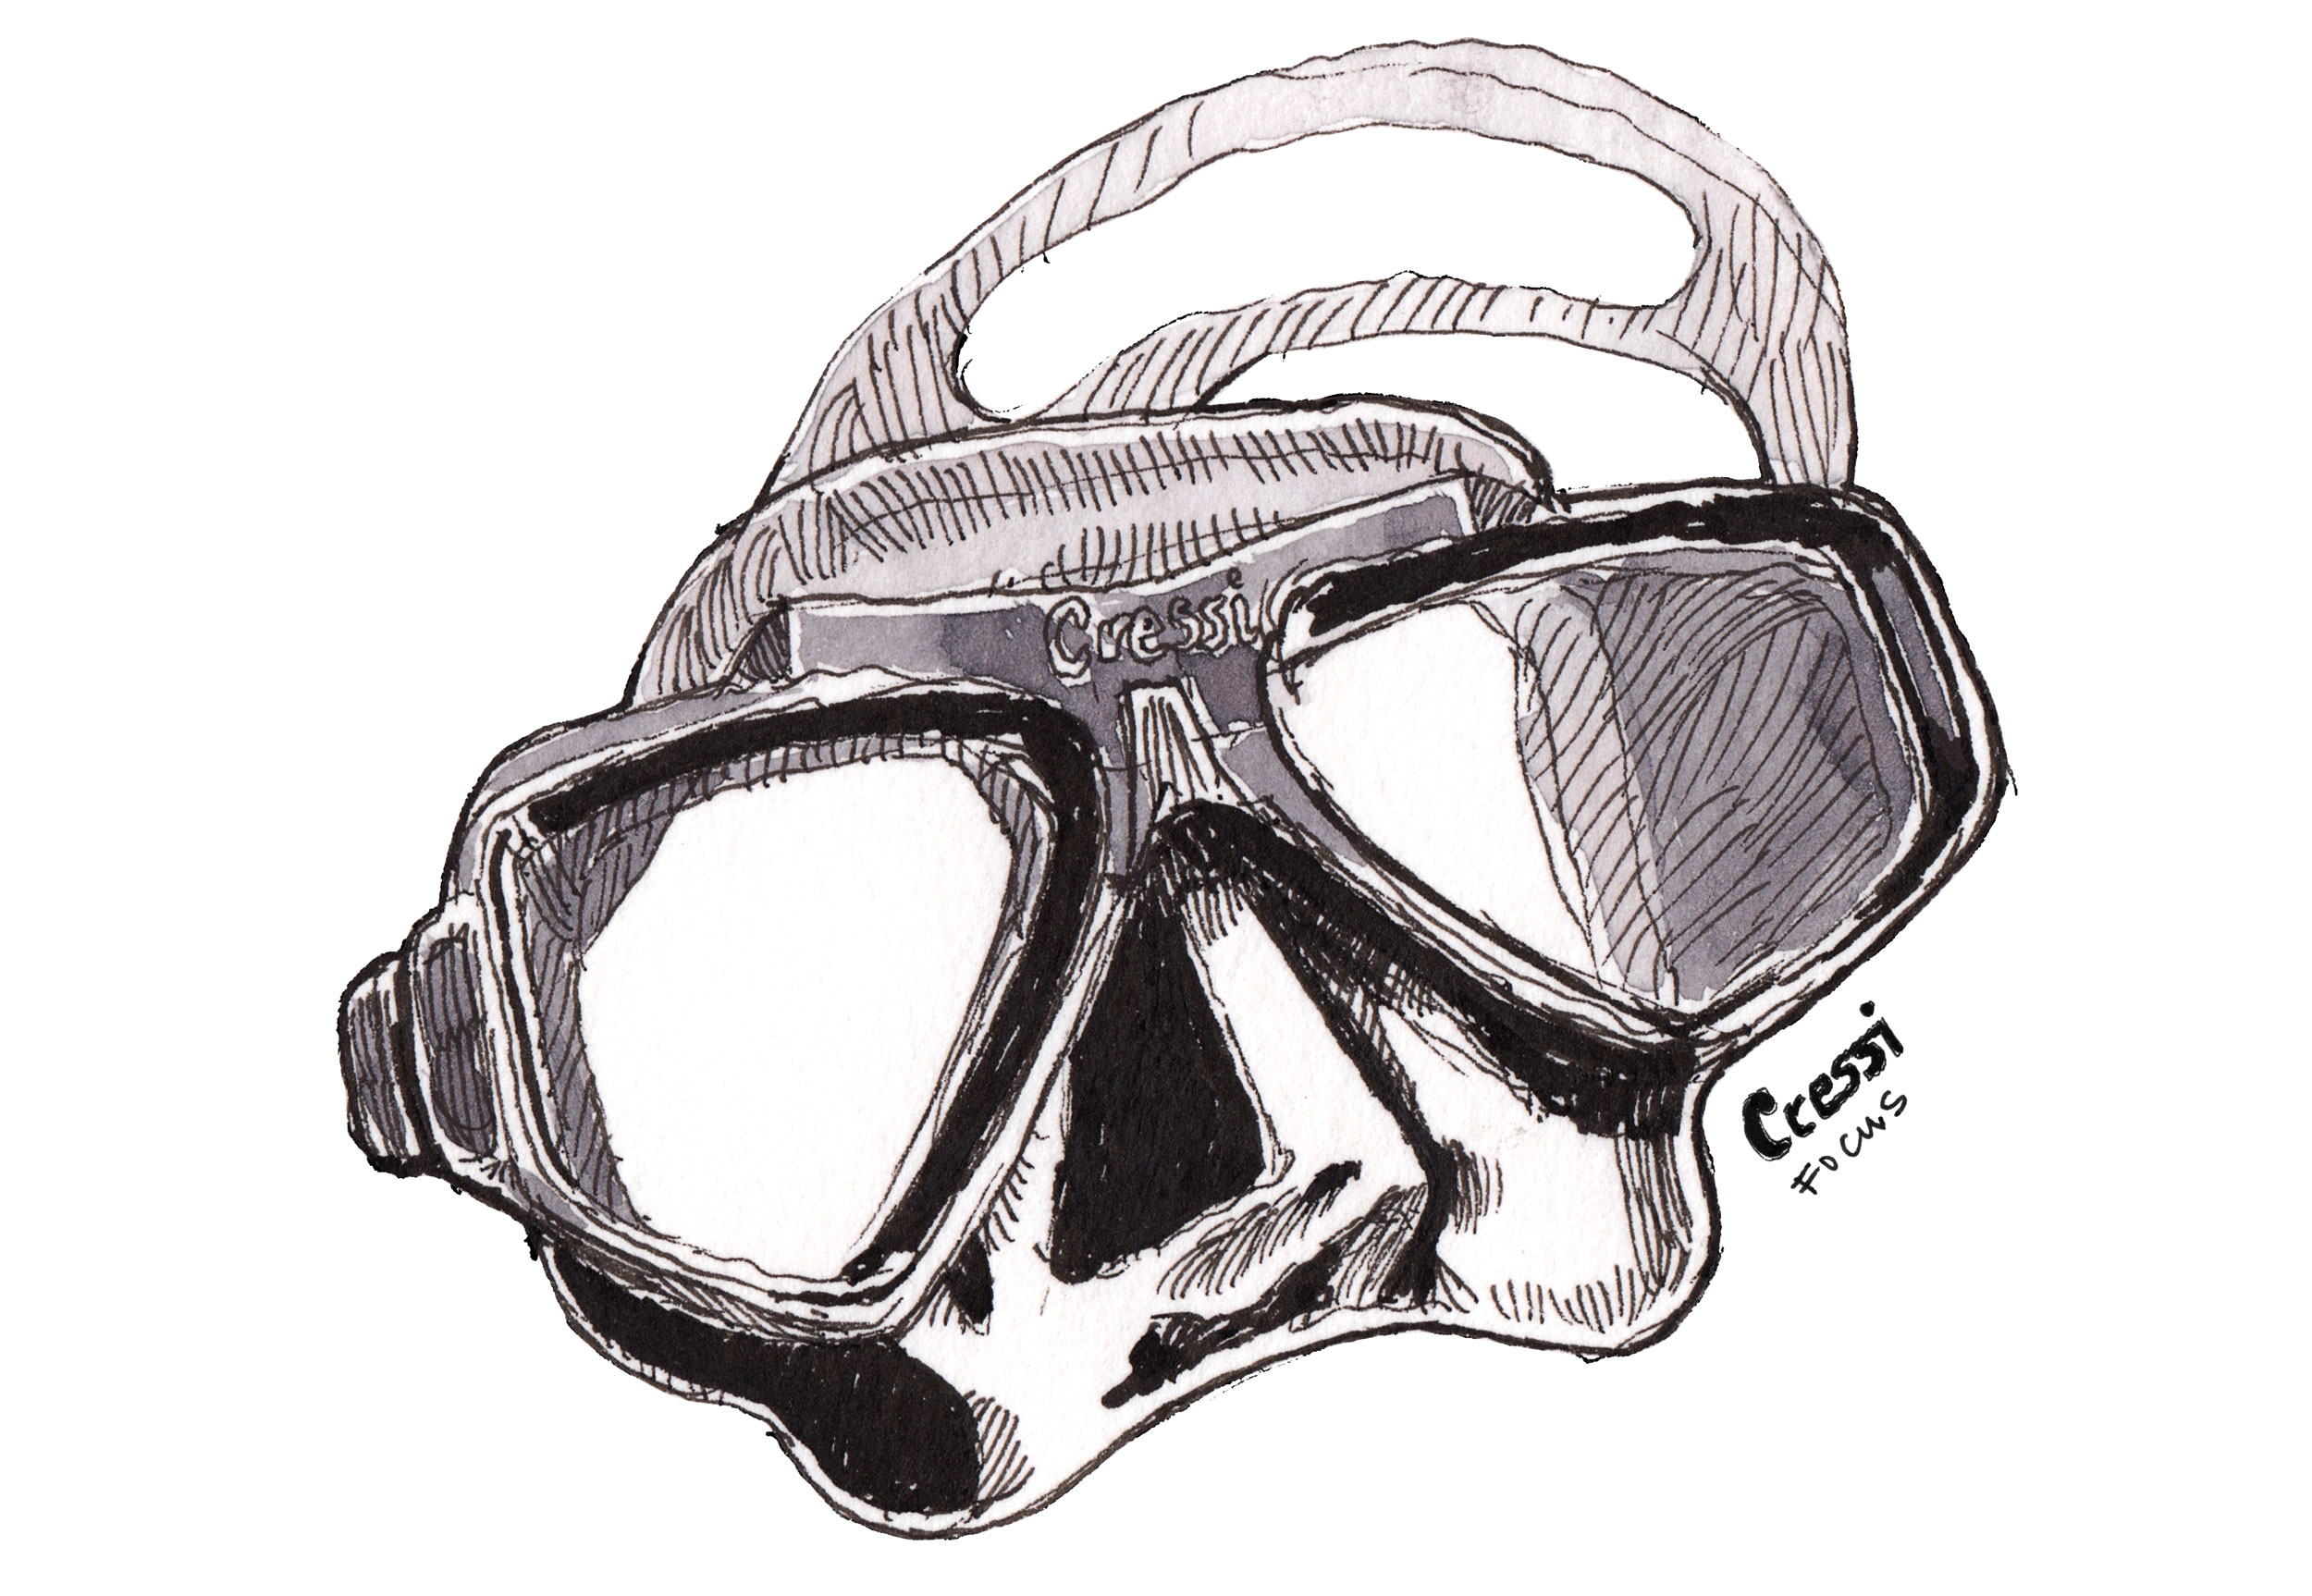 Sketch of a Cressi Focus diving mask.